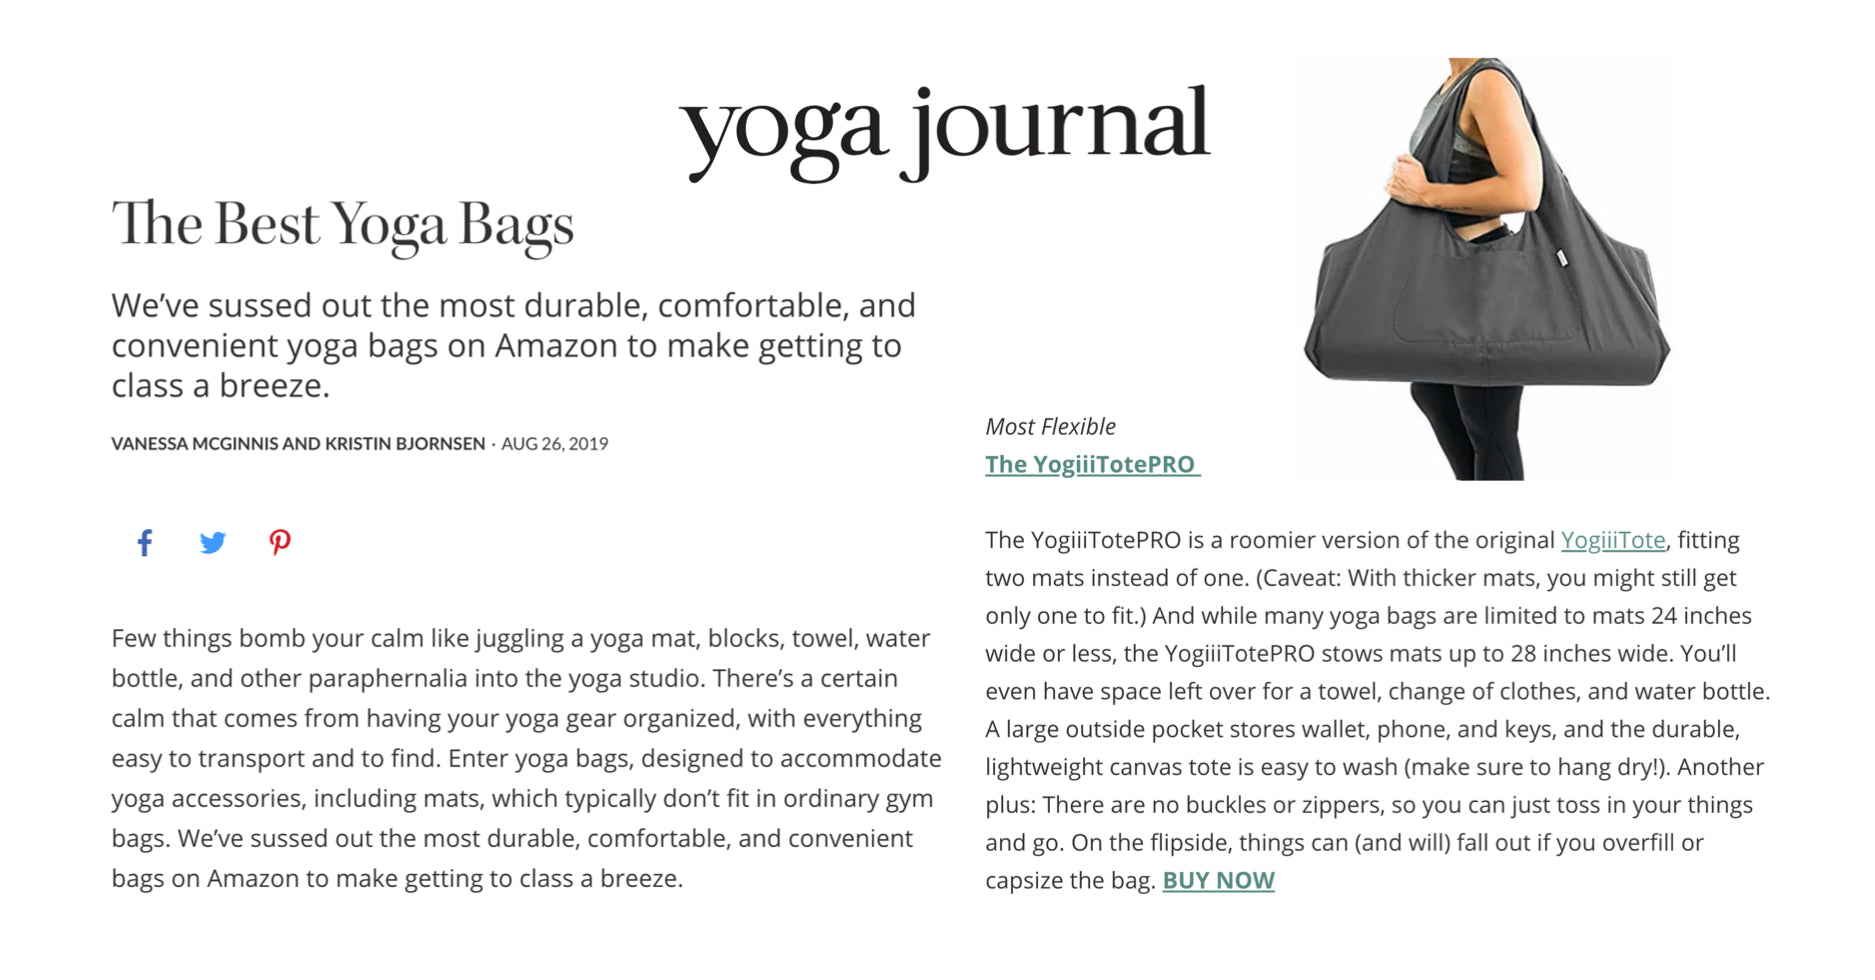 Yogiii Large Yoga Mat Bag, The ORIGINAL YogiiiTotePRO